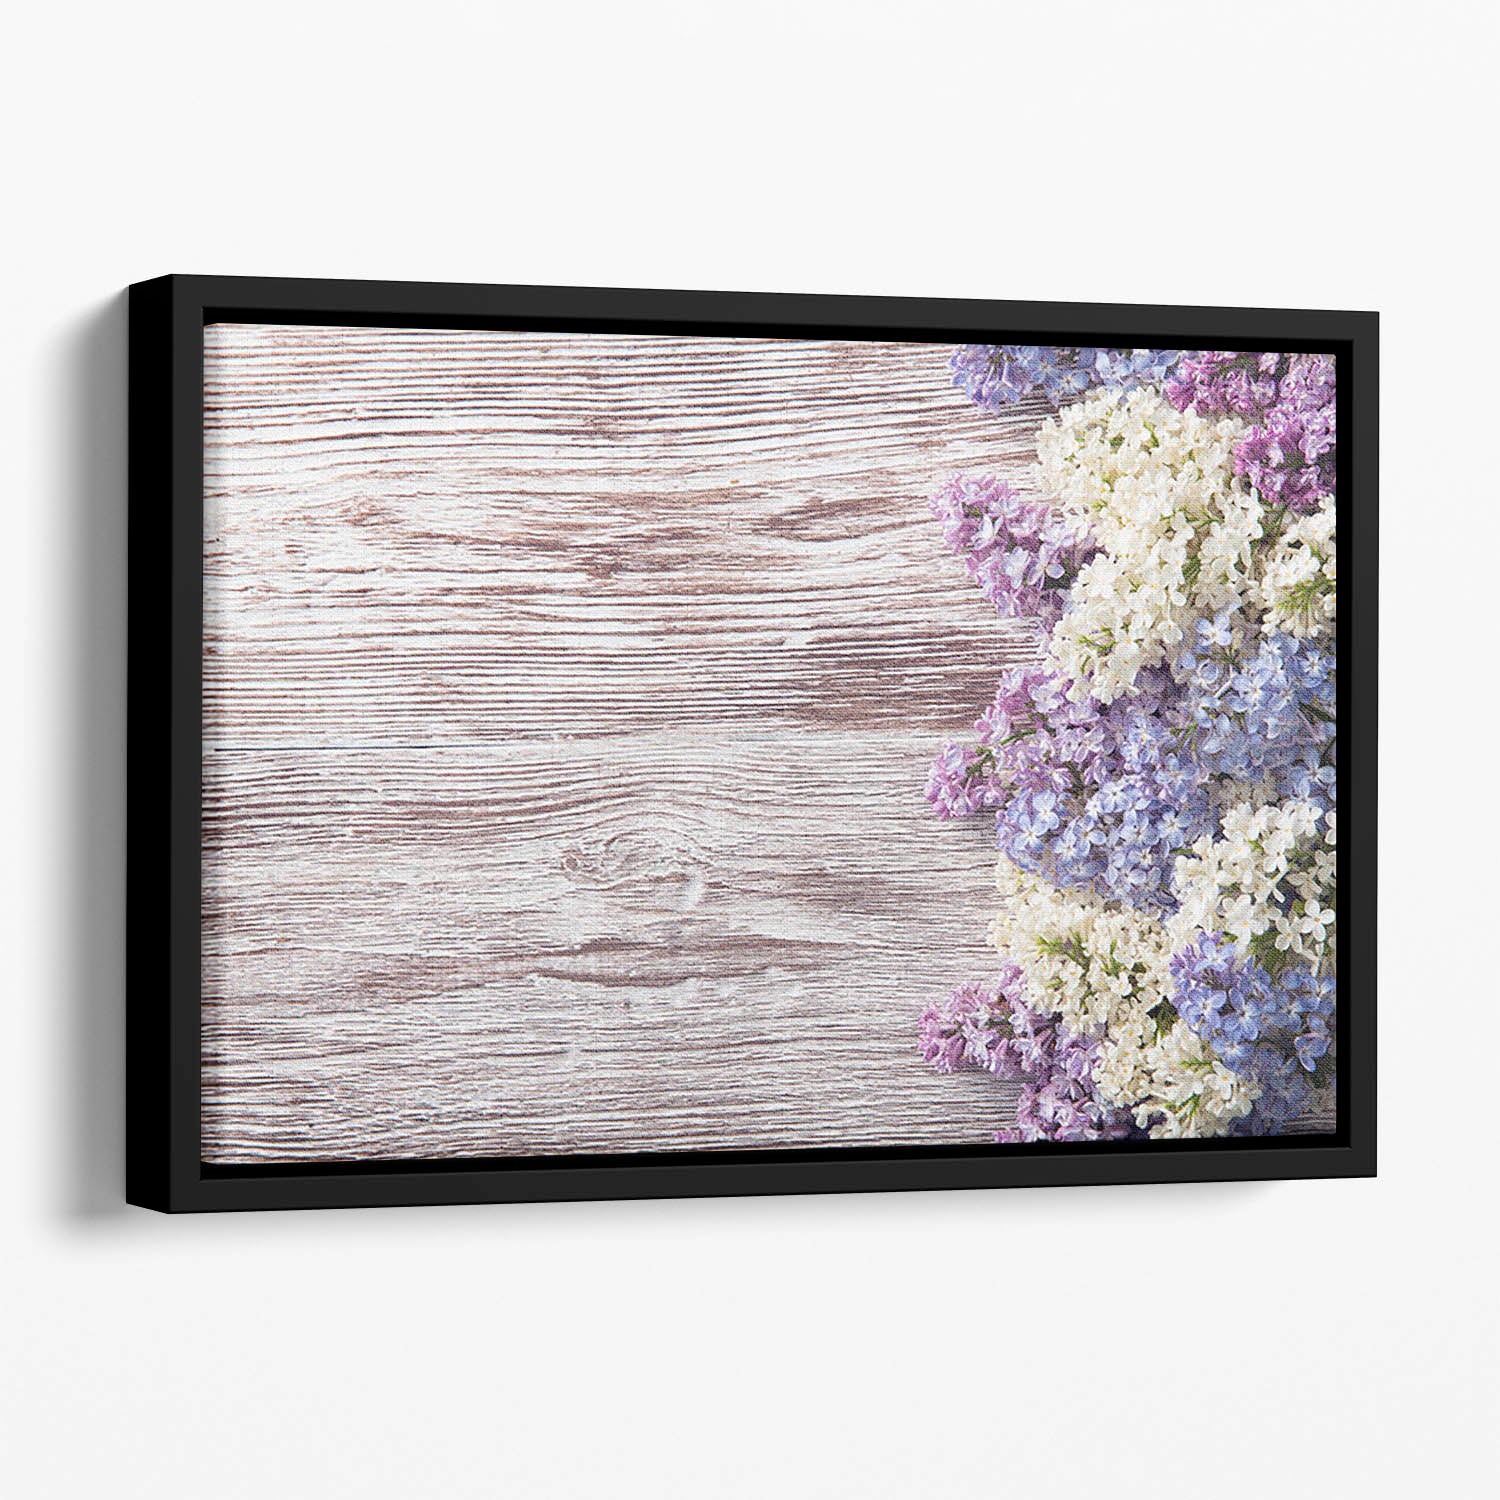 Blossom branch on wooden Floating Framed Canvas